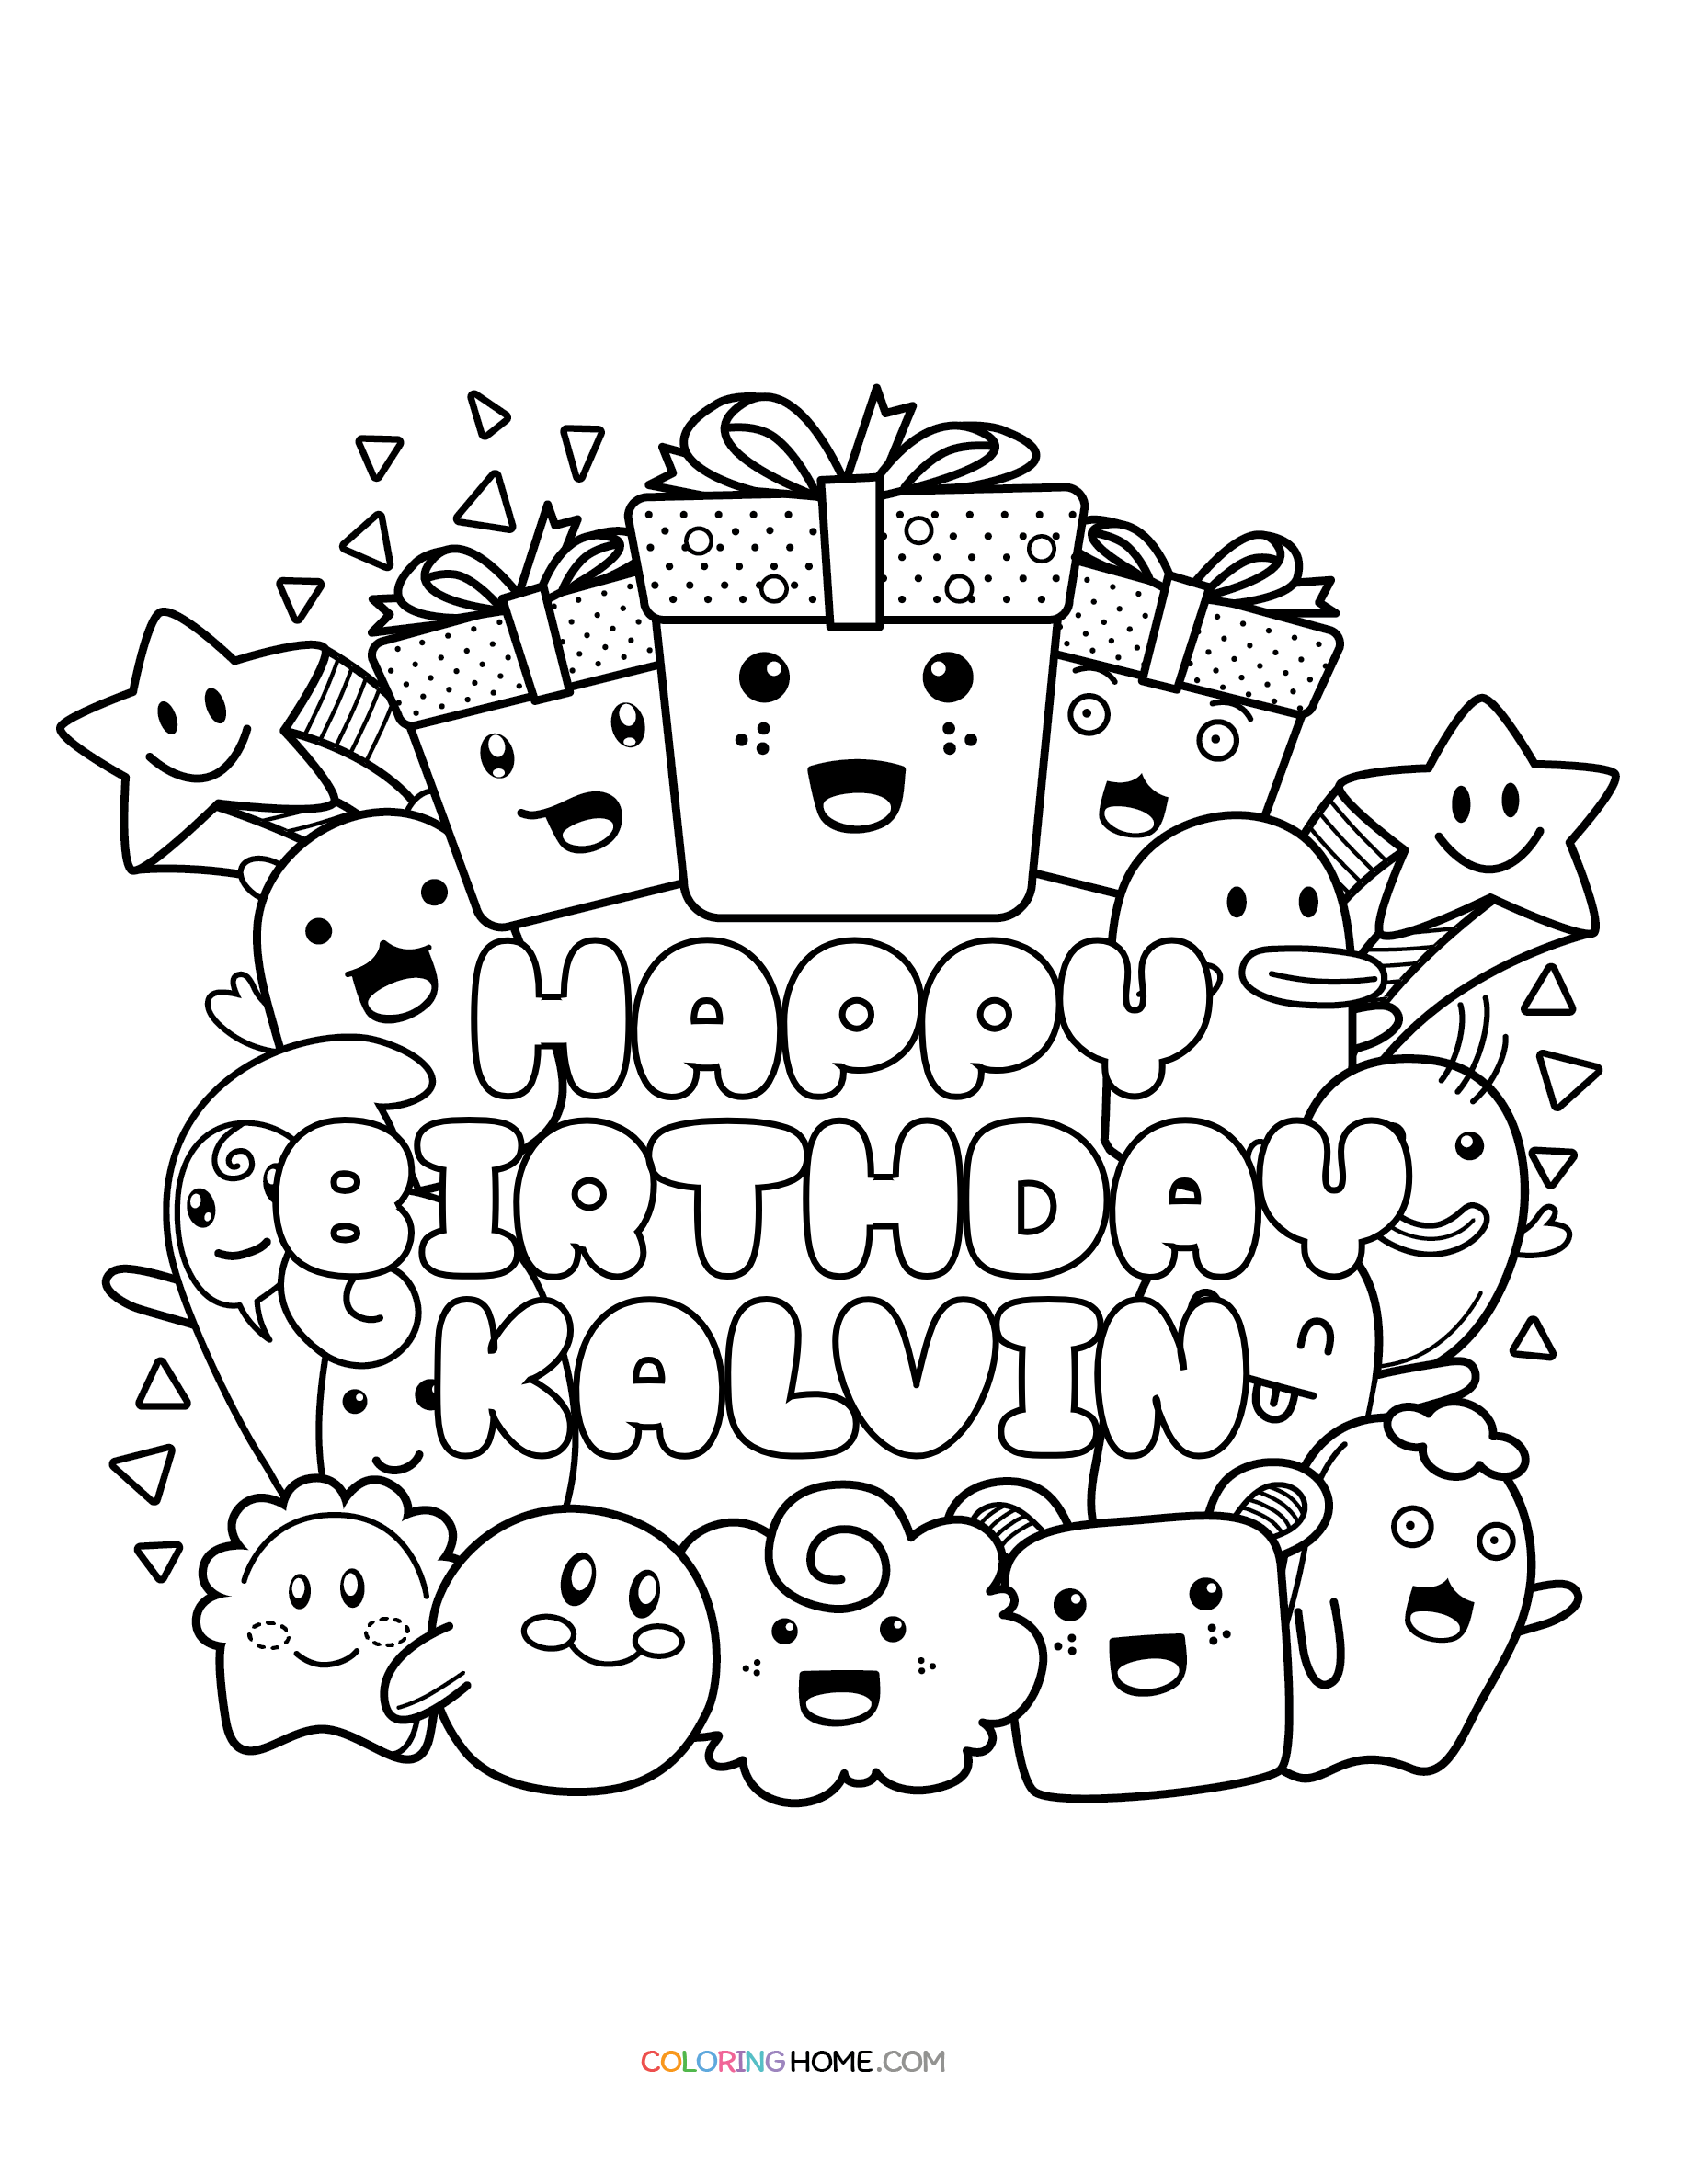 Happy Birthday Kalvin coloring page